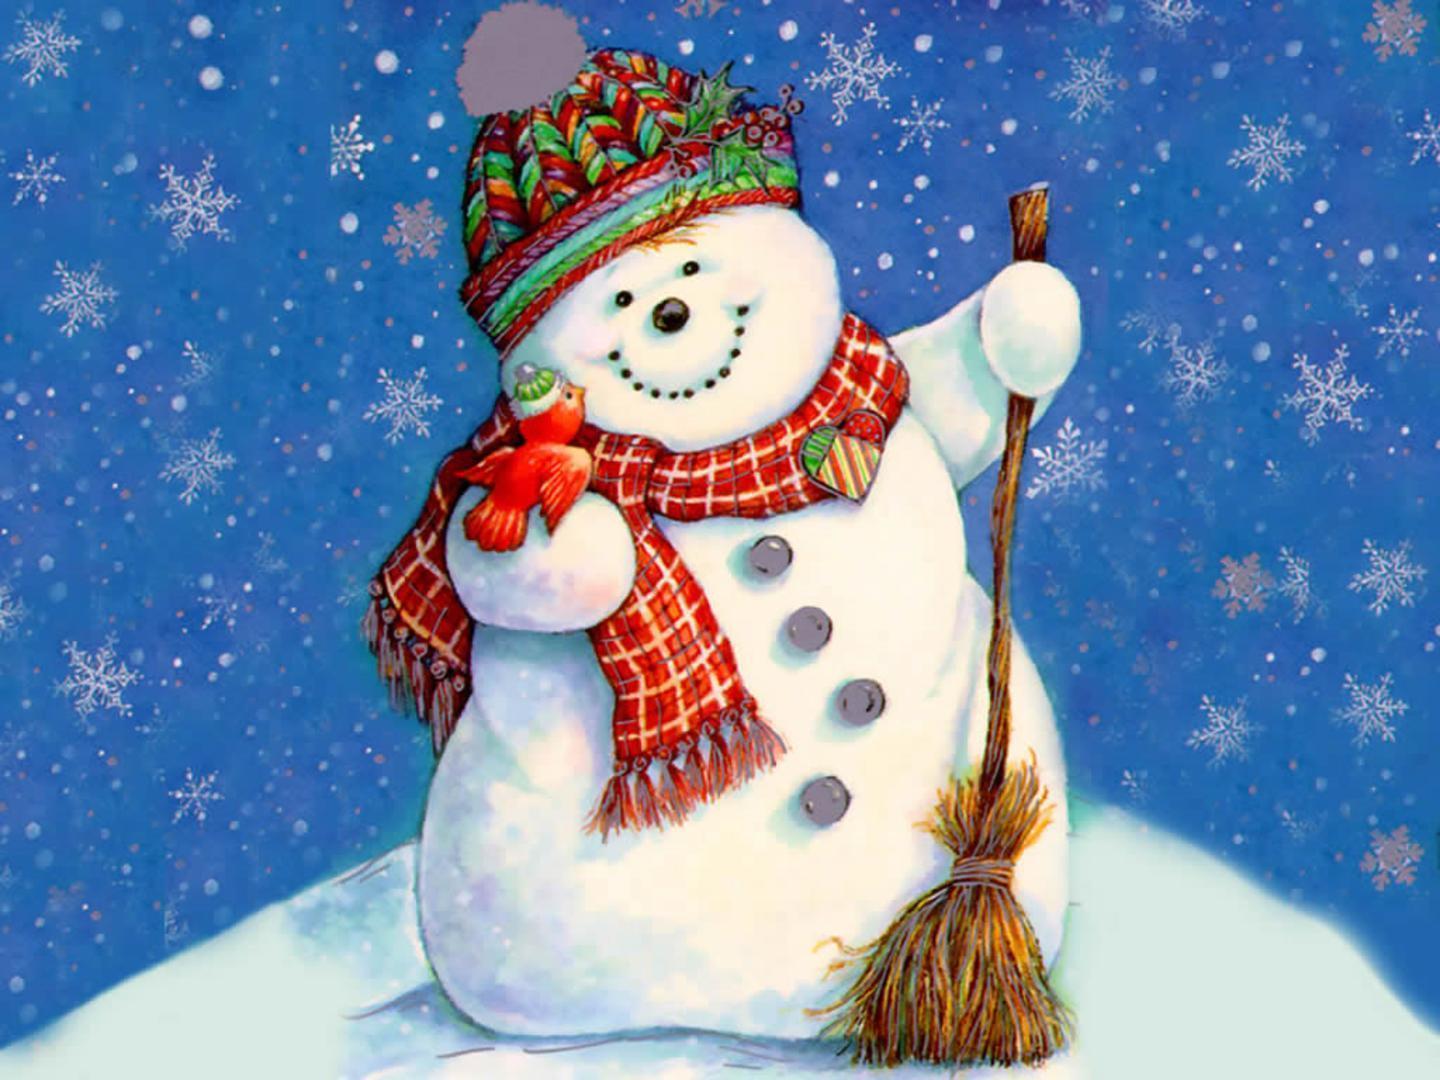 Happy snowman free desktop background wallpaper image